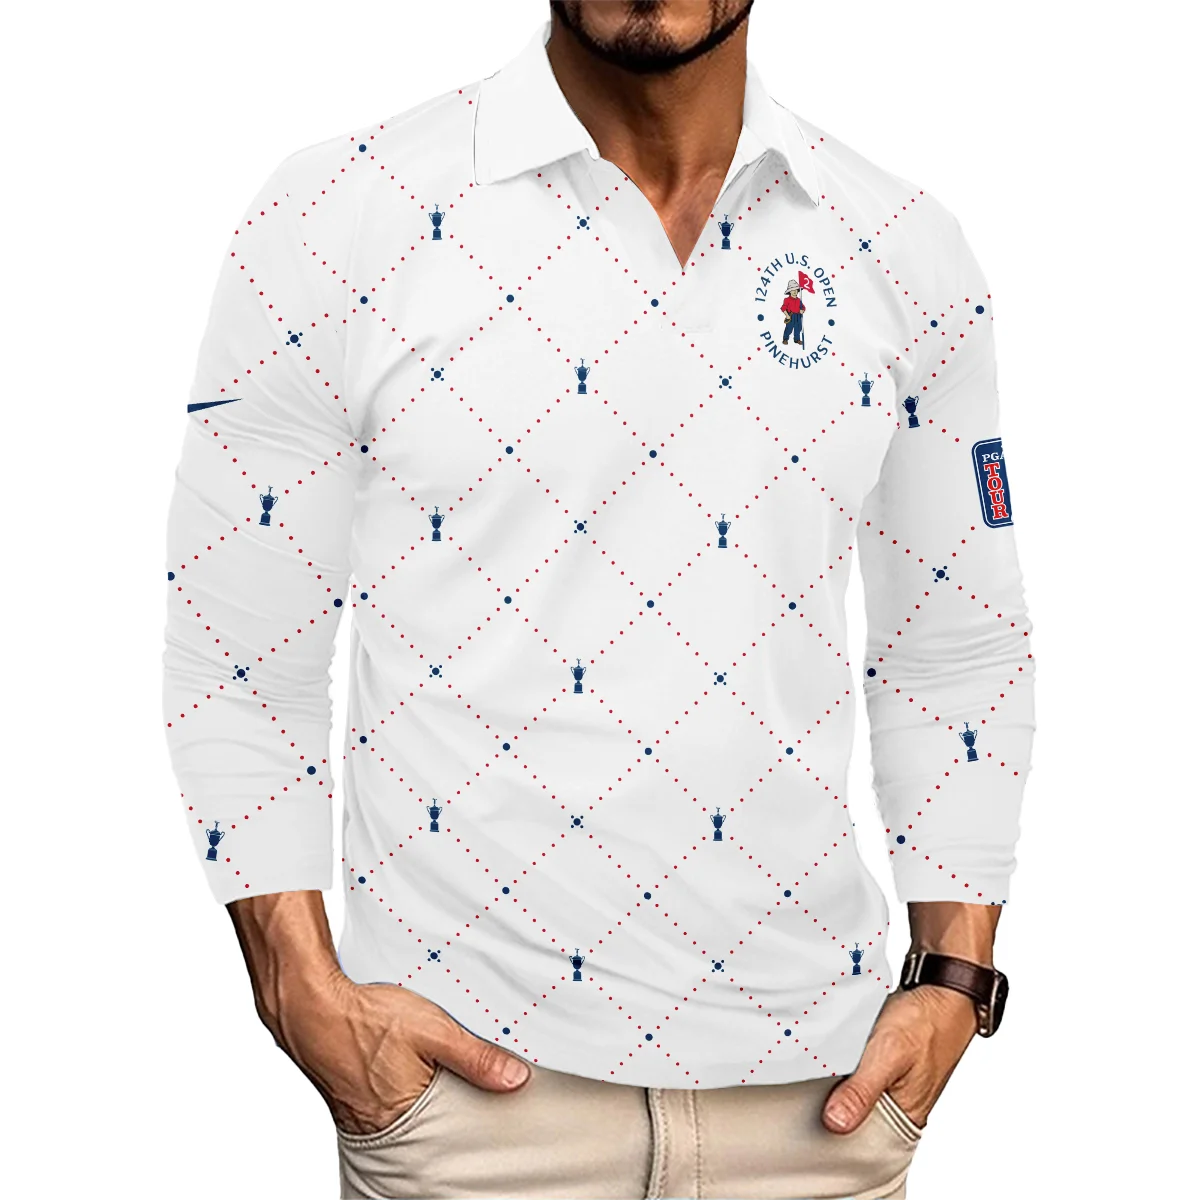 Argyle Pattern With Cup 124th U.S. Open Pinehurst Nike Zipper Hoodie Shirt Style Classic Zipper Hoodie Shirt